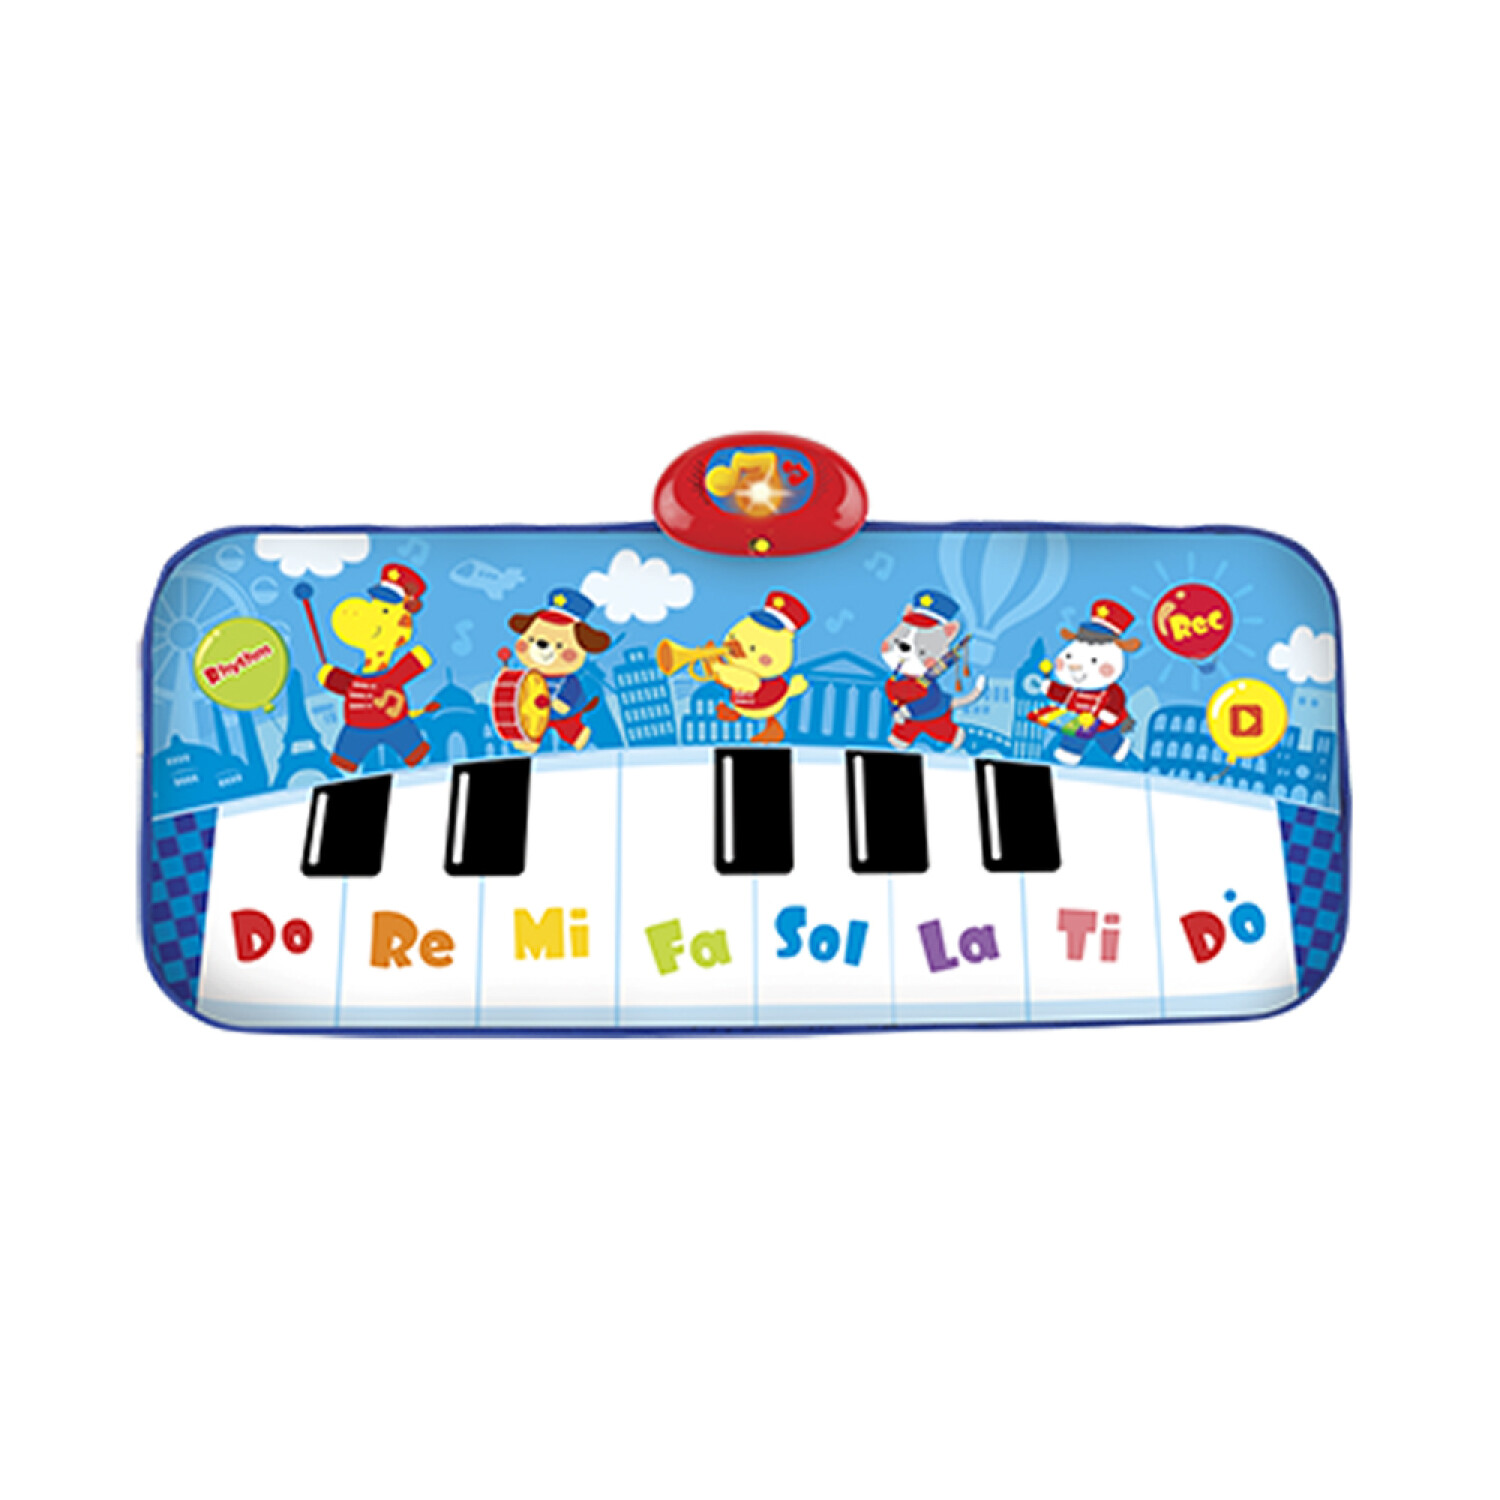 Comprar Piano infantil Winfun